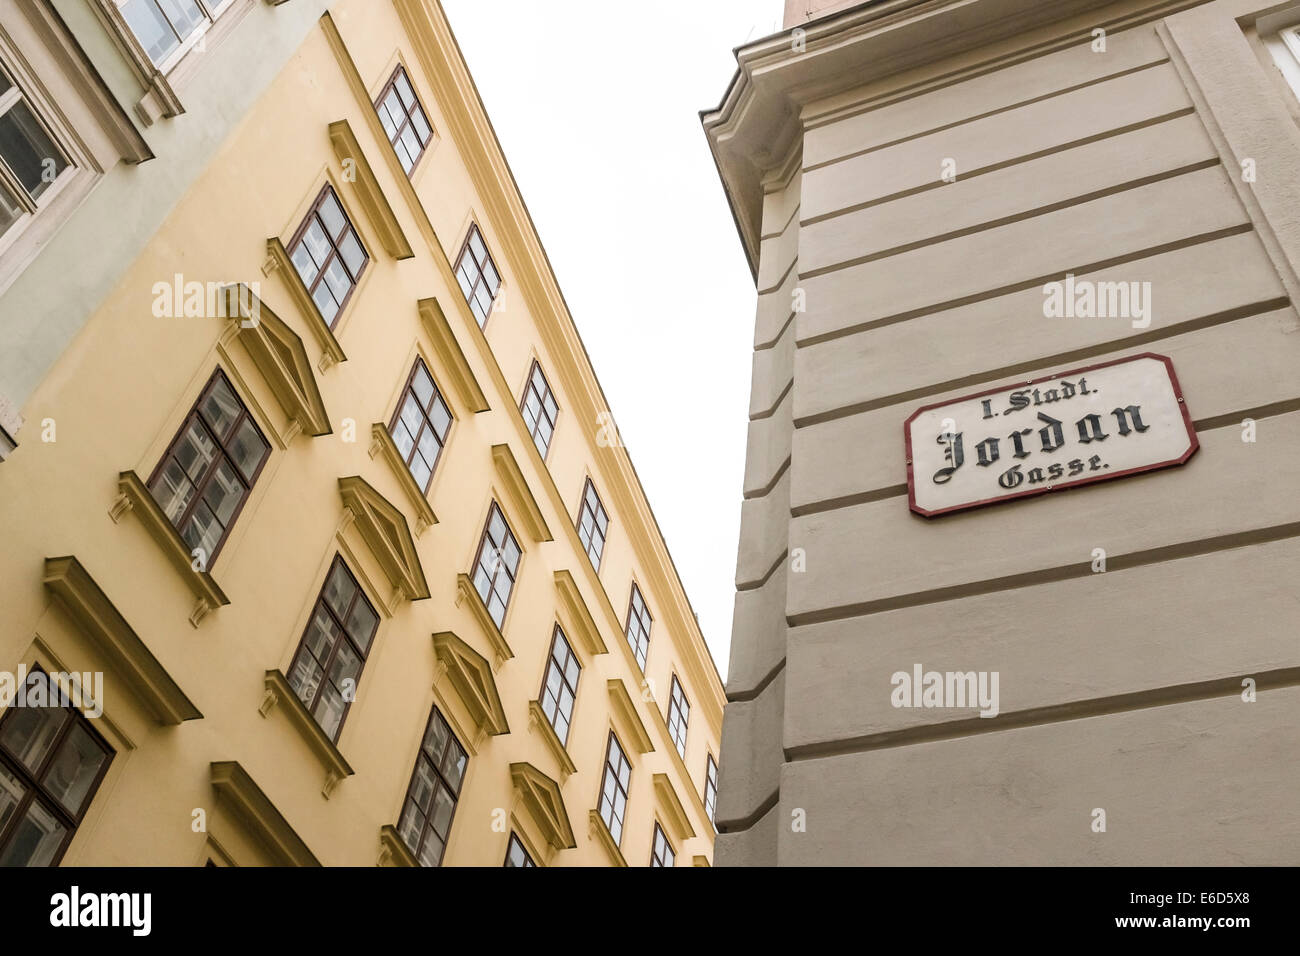 Jordan Gasse, Vienna, table with building facade Stock Photo